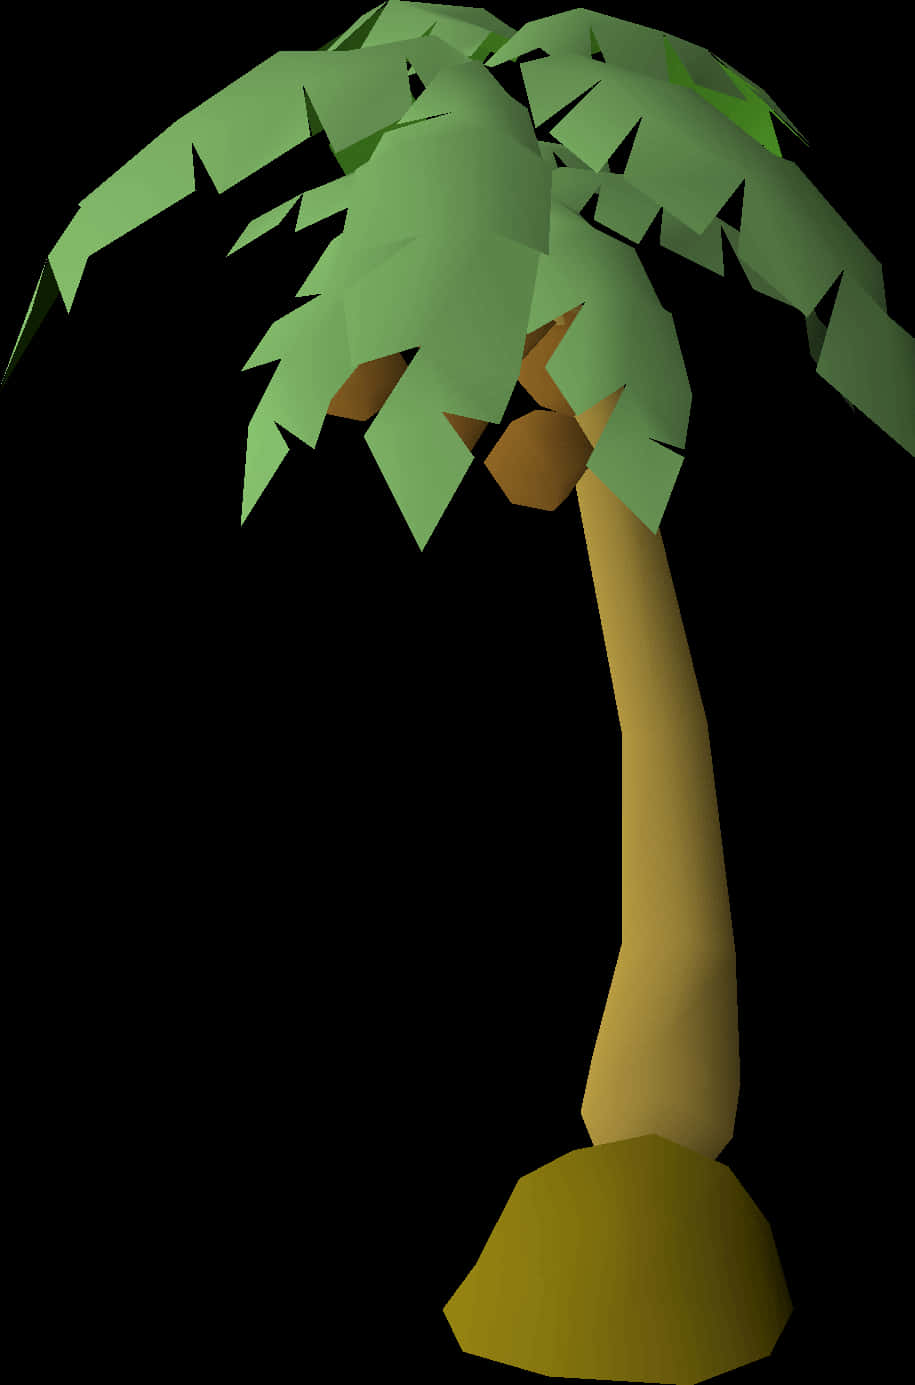 A Low Poly Palm Tree